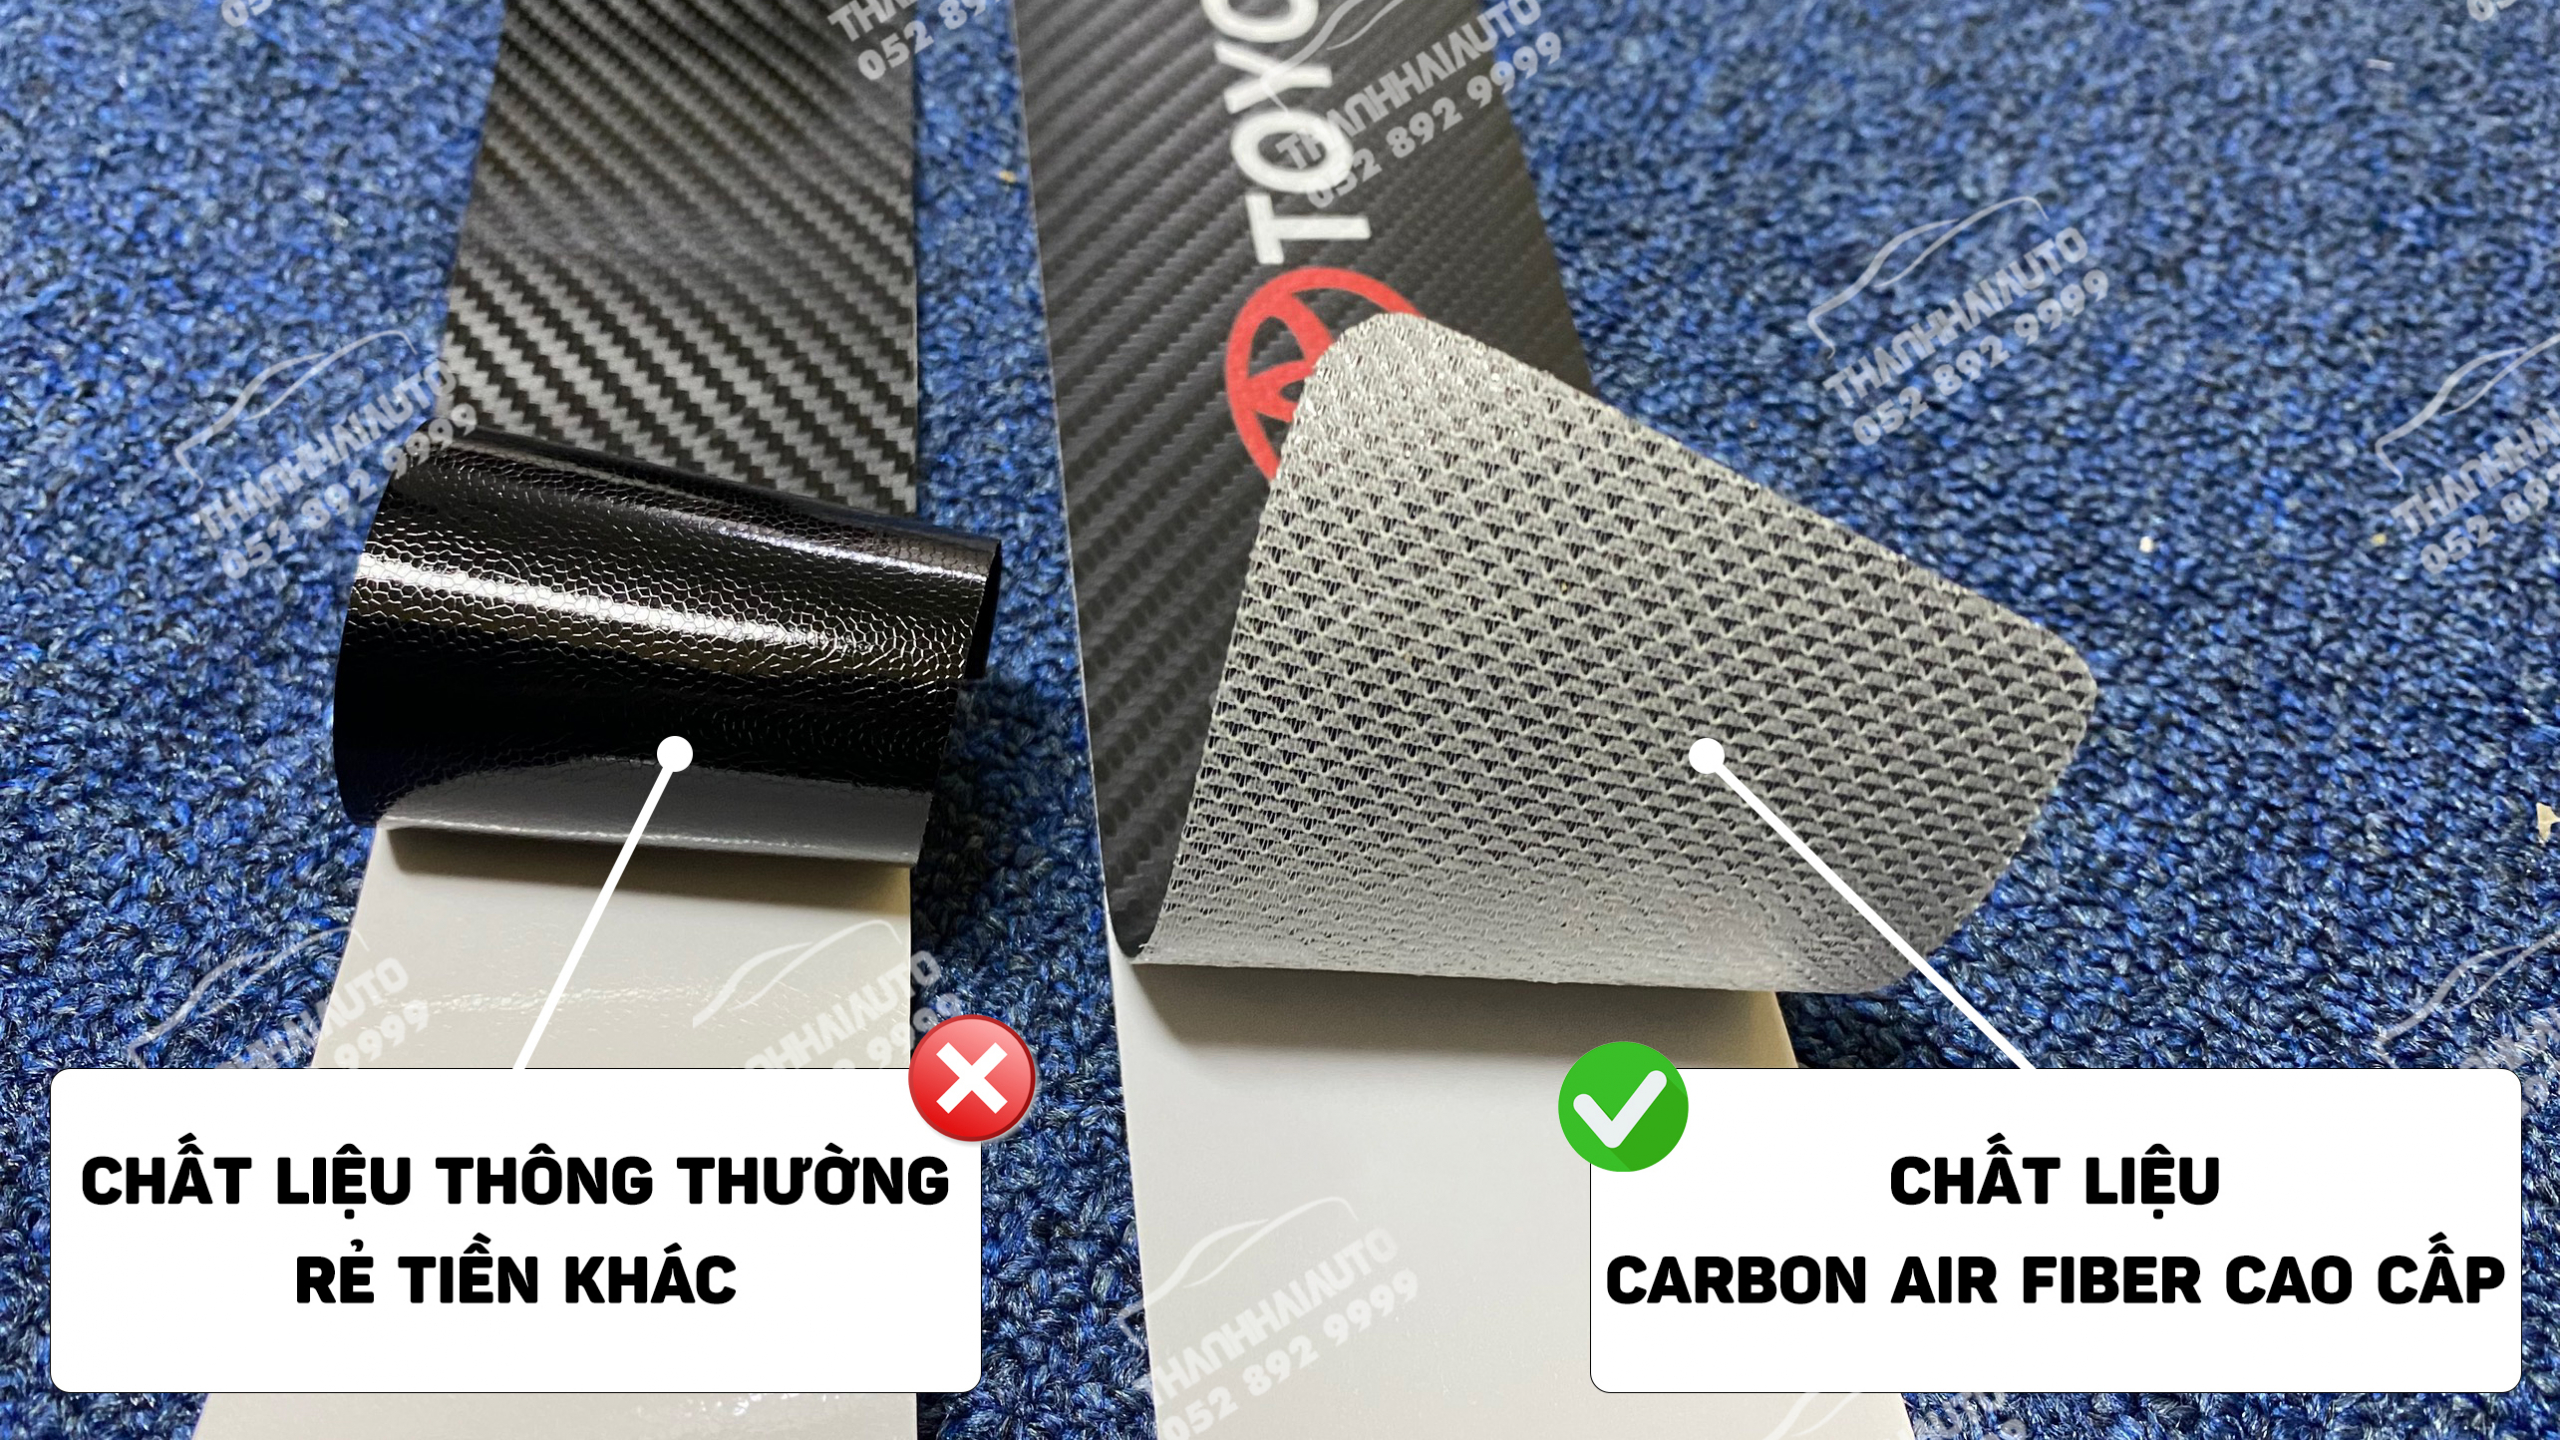 mieng-dan-chong-xuoc-bac-cua-carbon-fiber-cao-cap-2-5